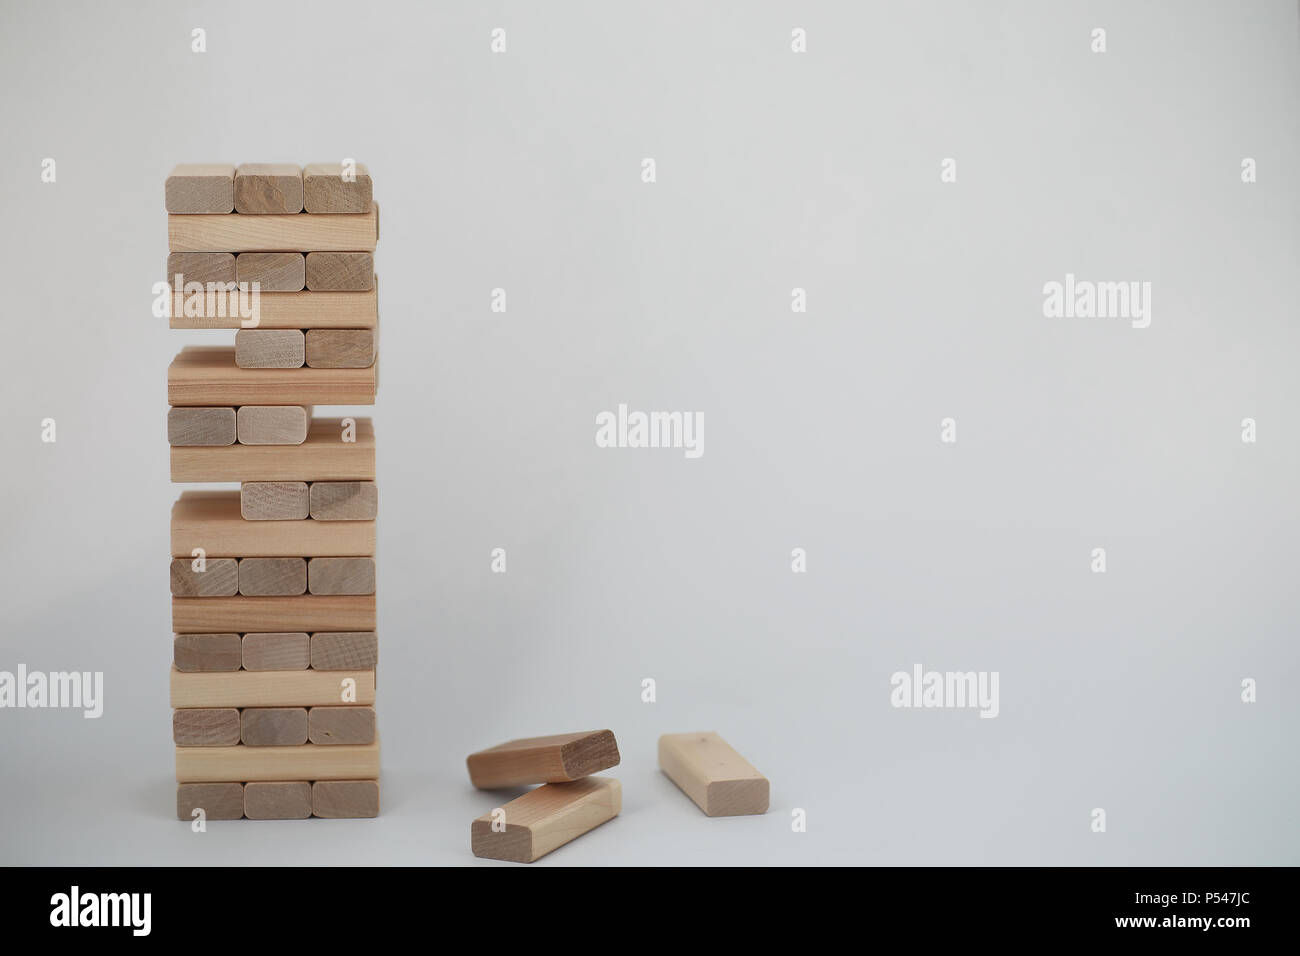 Board game jenga tower of light wood sticks Stock Photo - Alamy